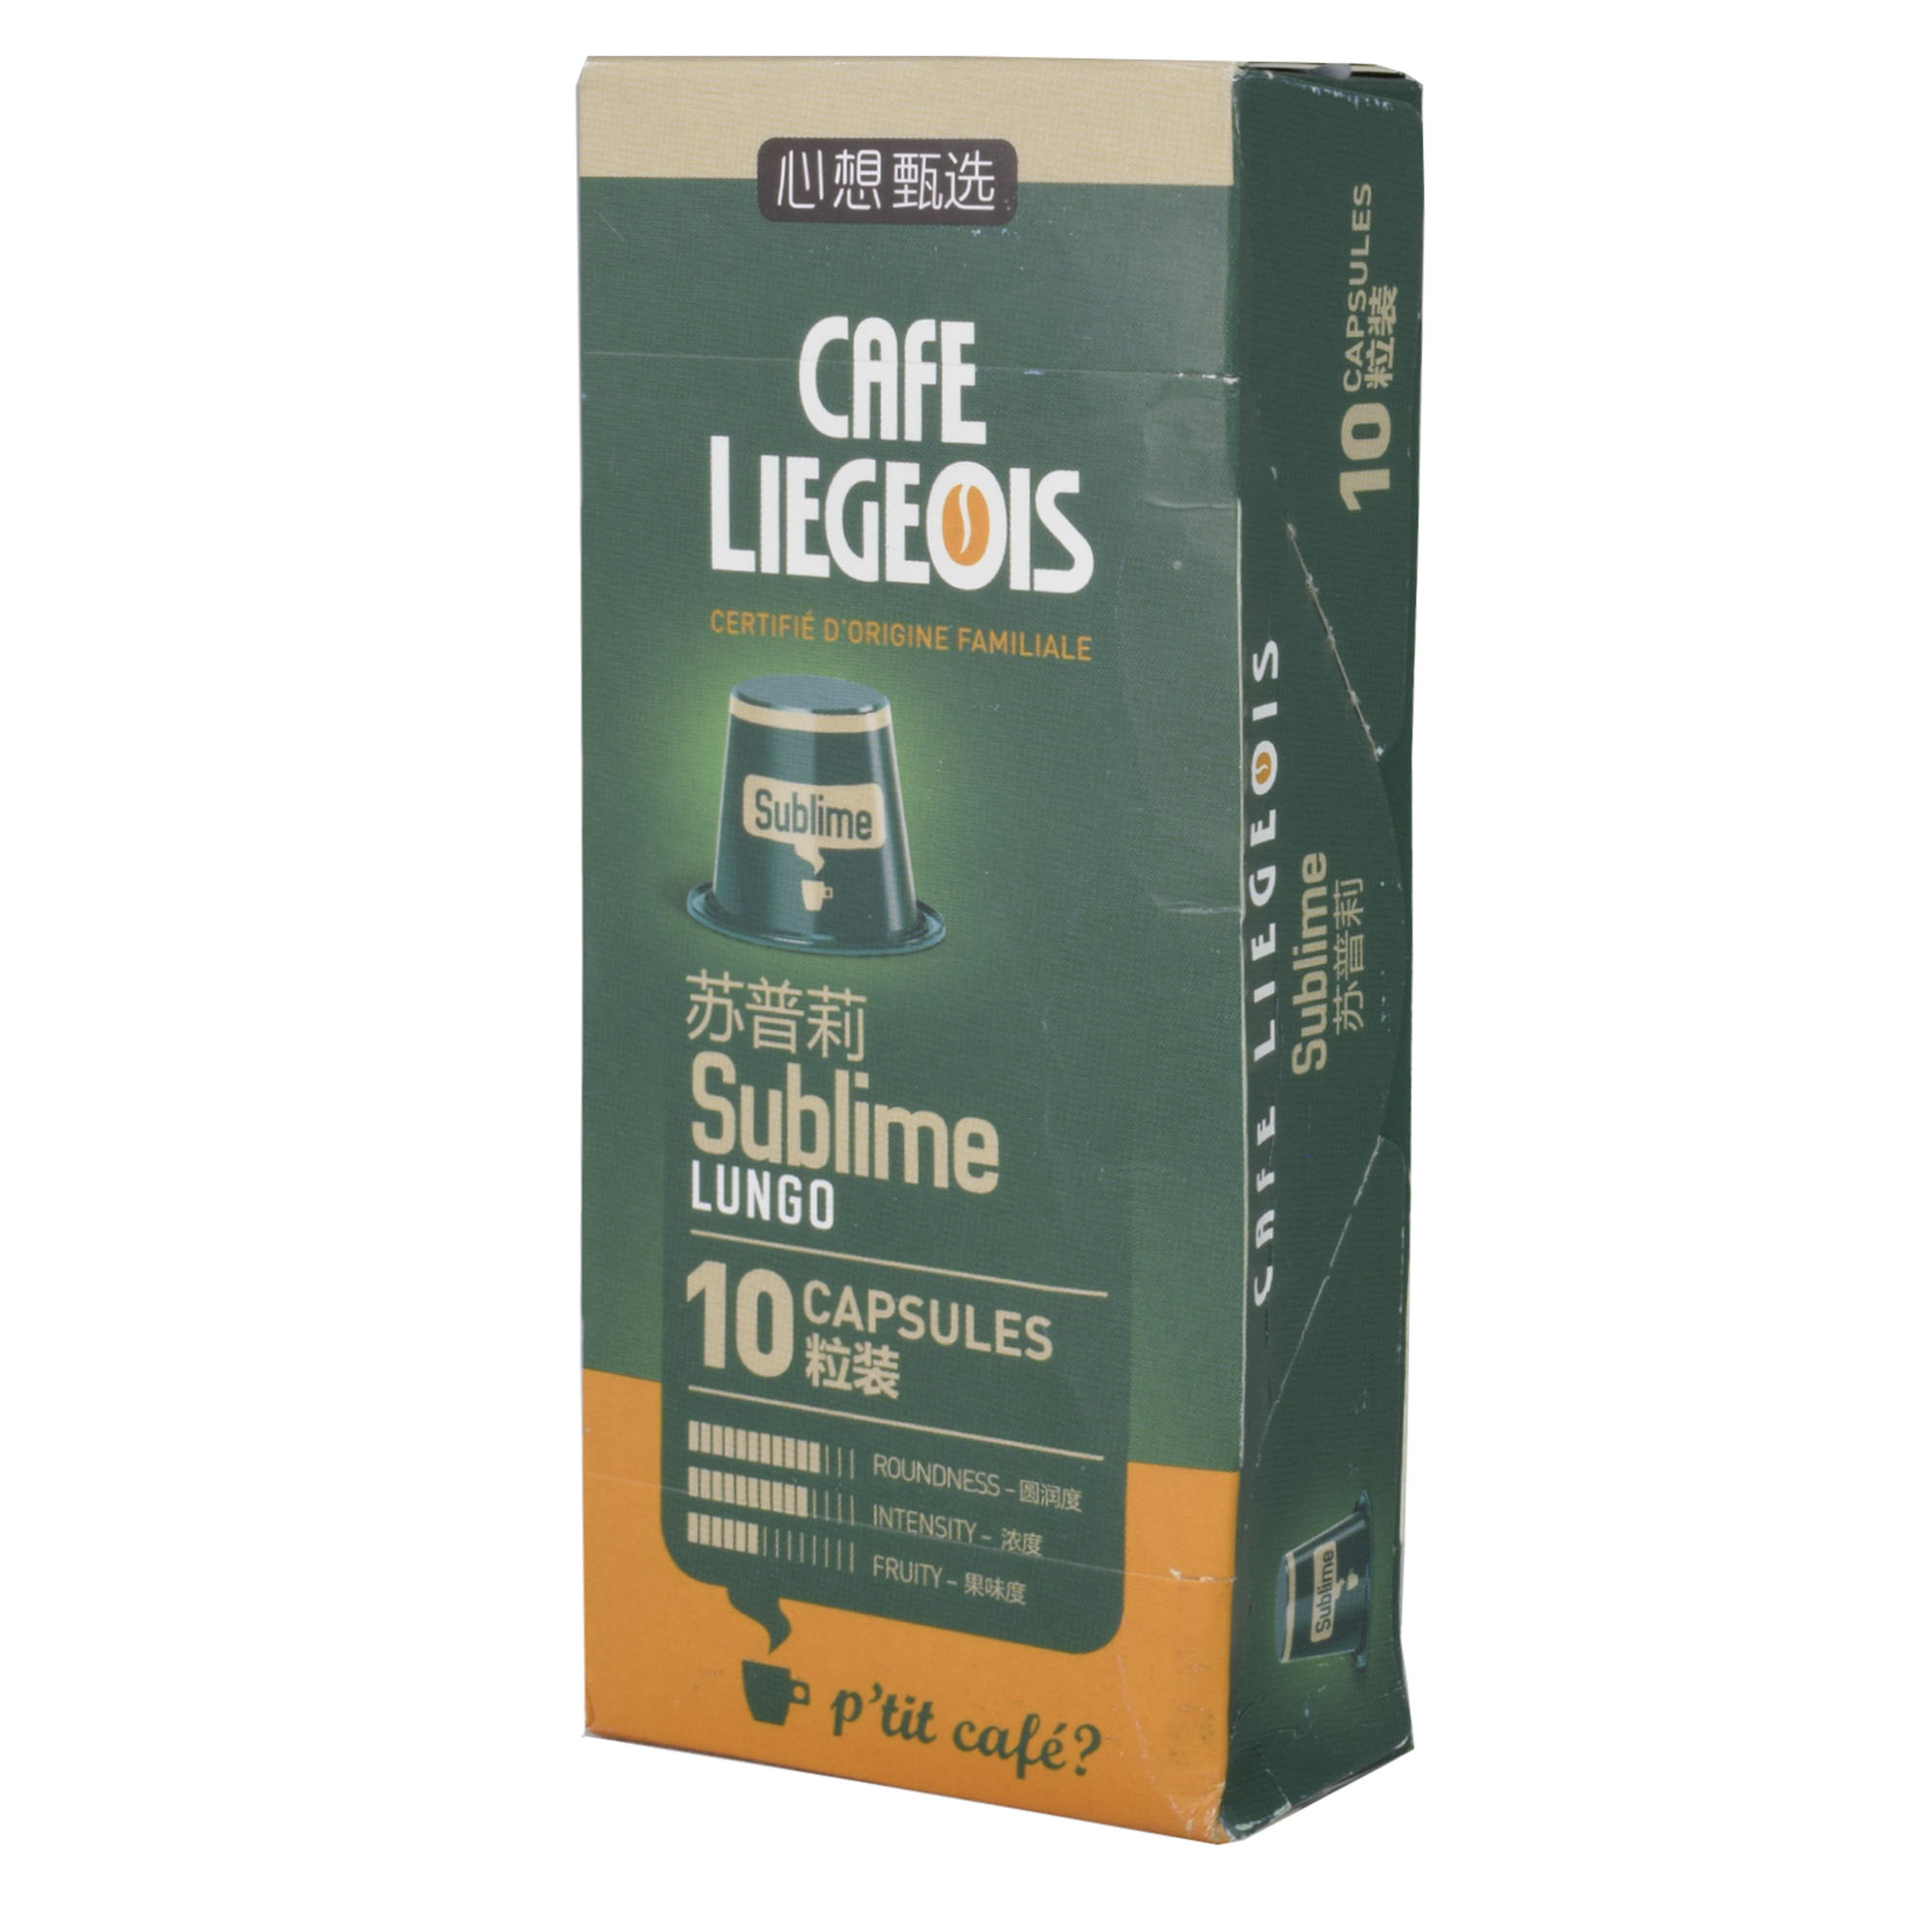 کپسول قهوه لجیوس مدل Sublime بسته 10 عددی